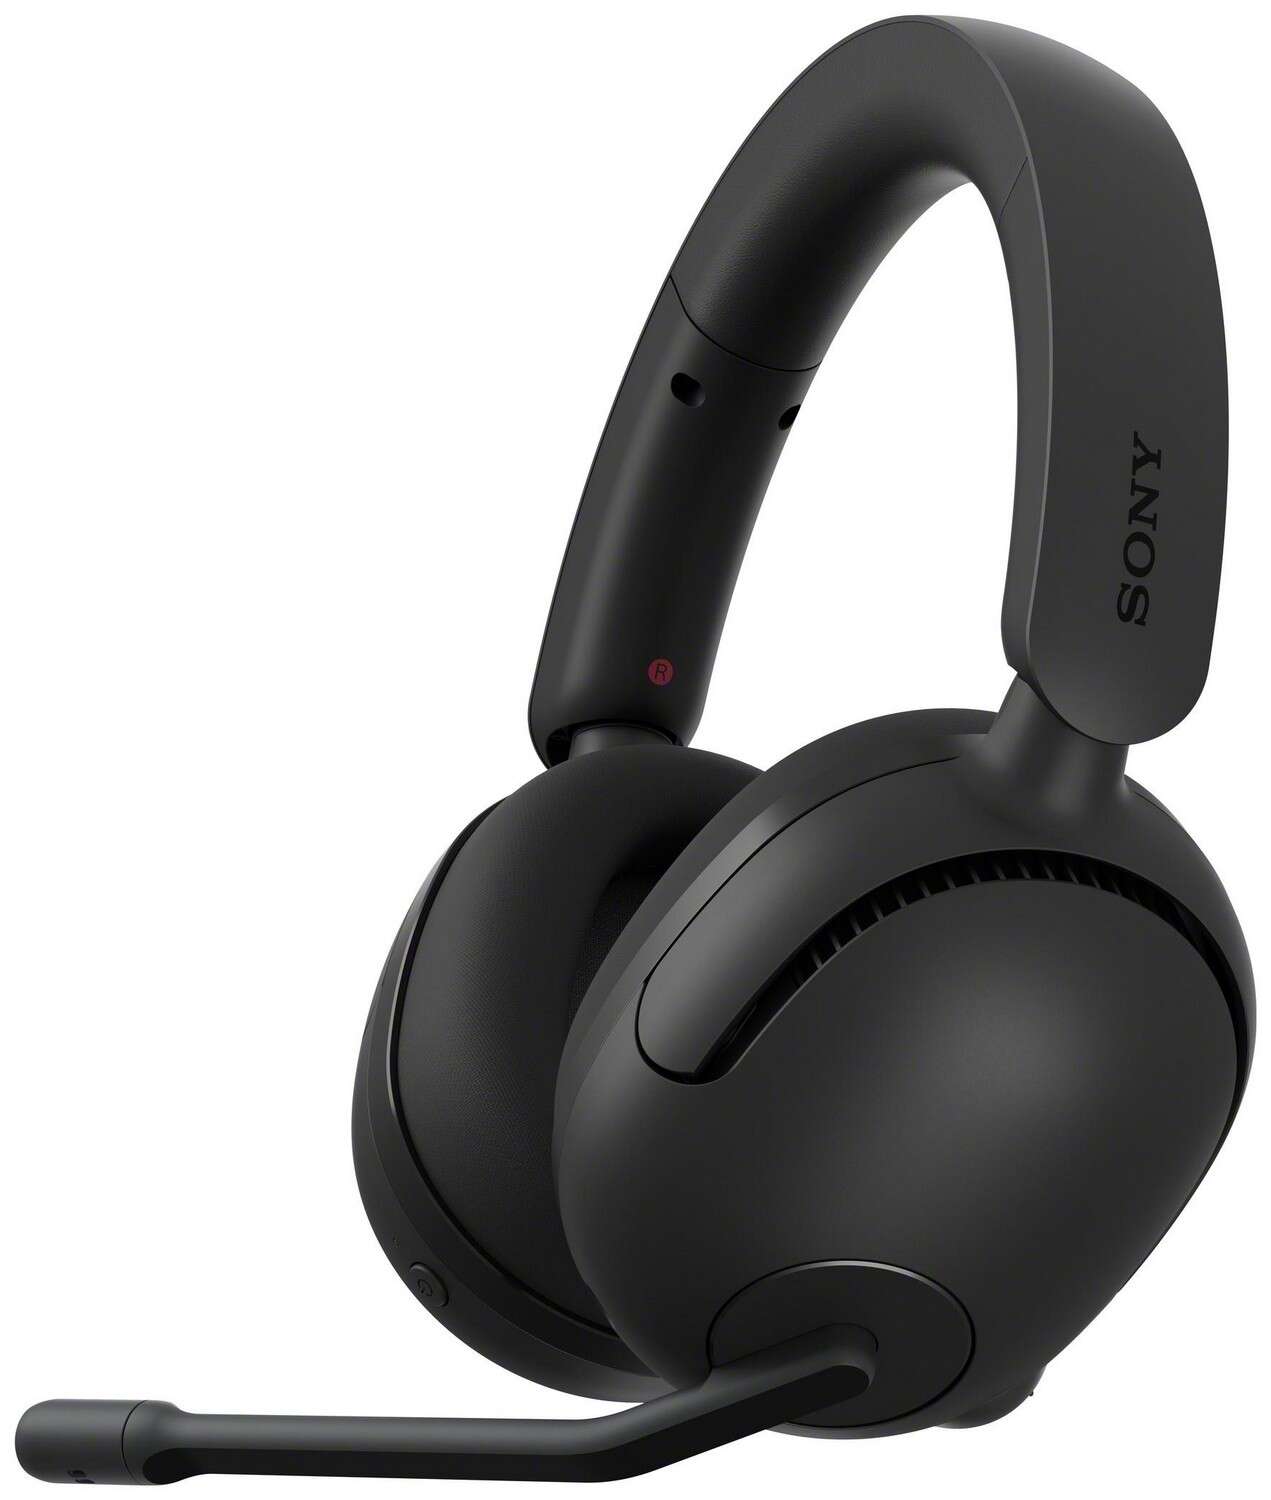 Sony inzone h5 wireless/vezetékes gaming headset - fekete